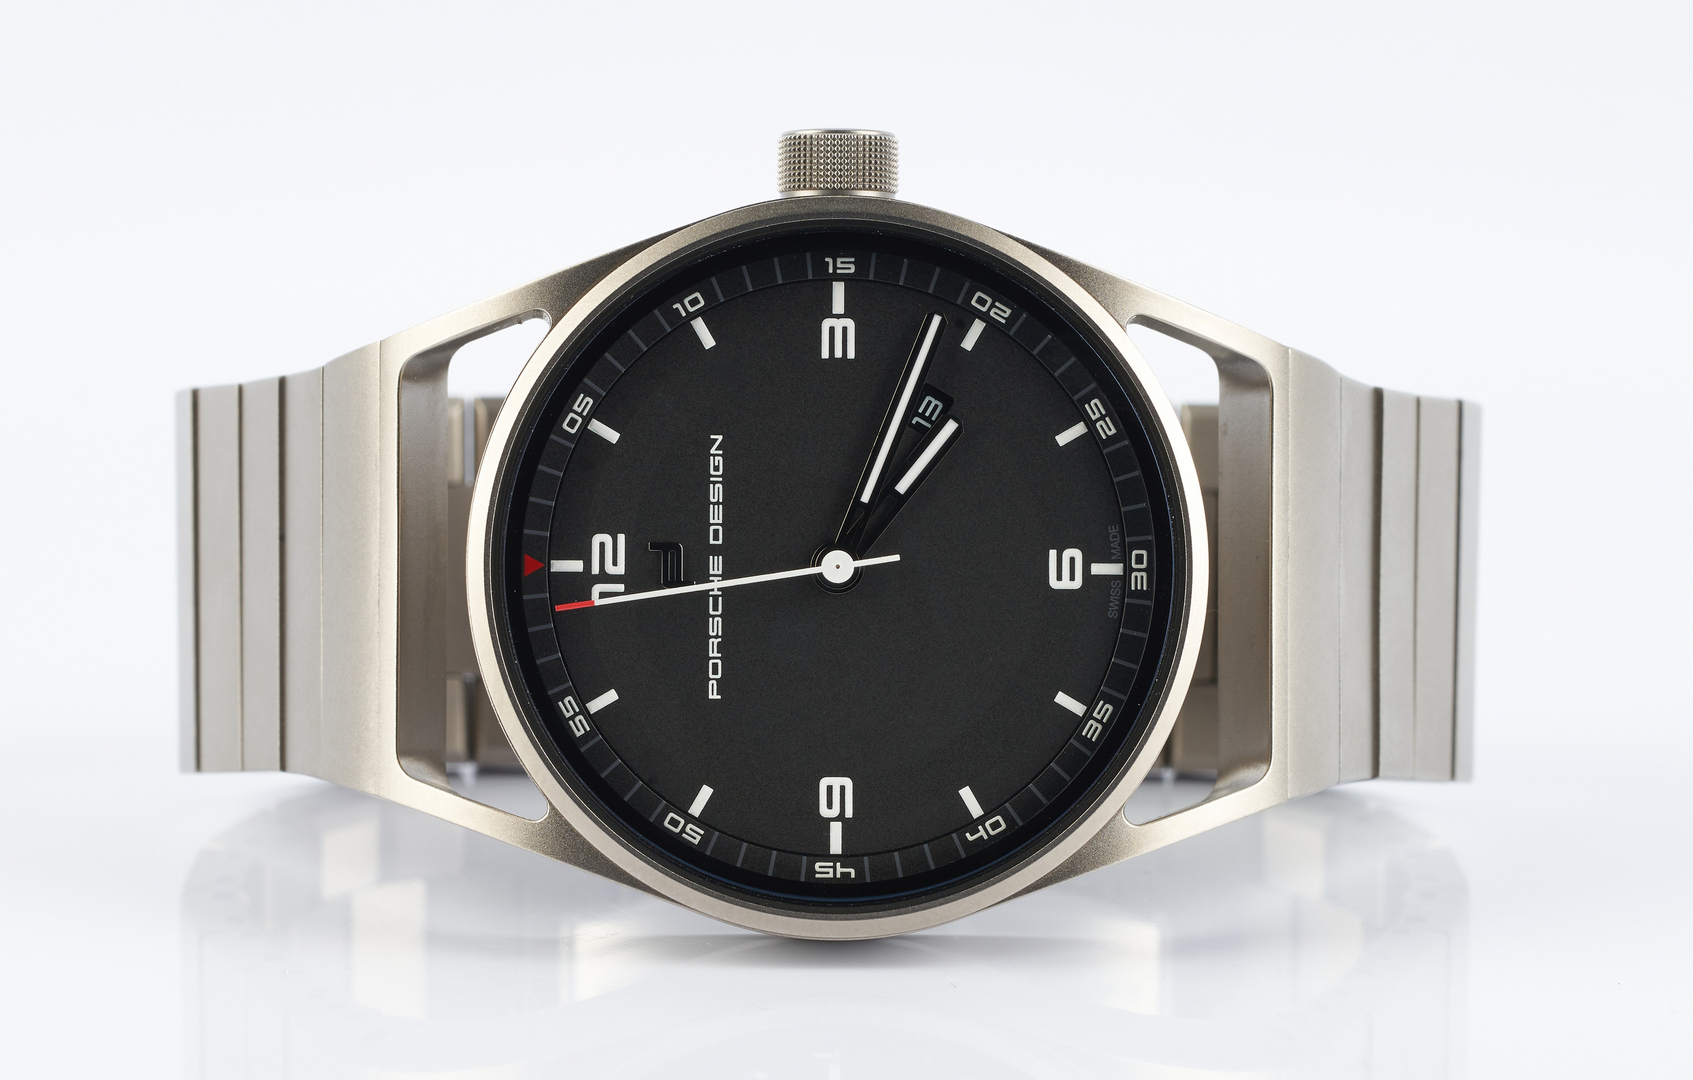 Lot 264: Porsche Design 1919 Datetimer Wrist Watch